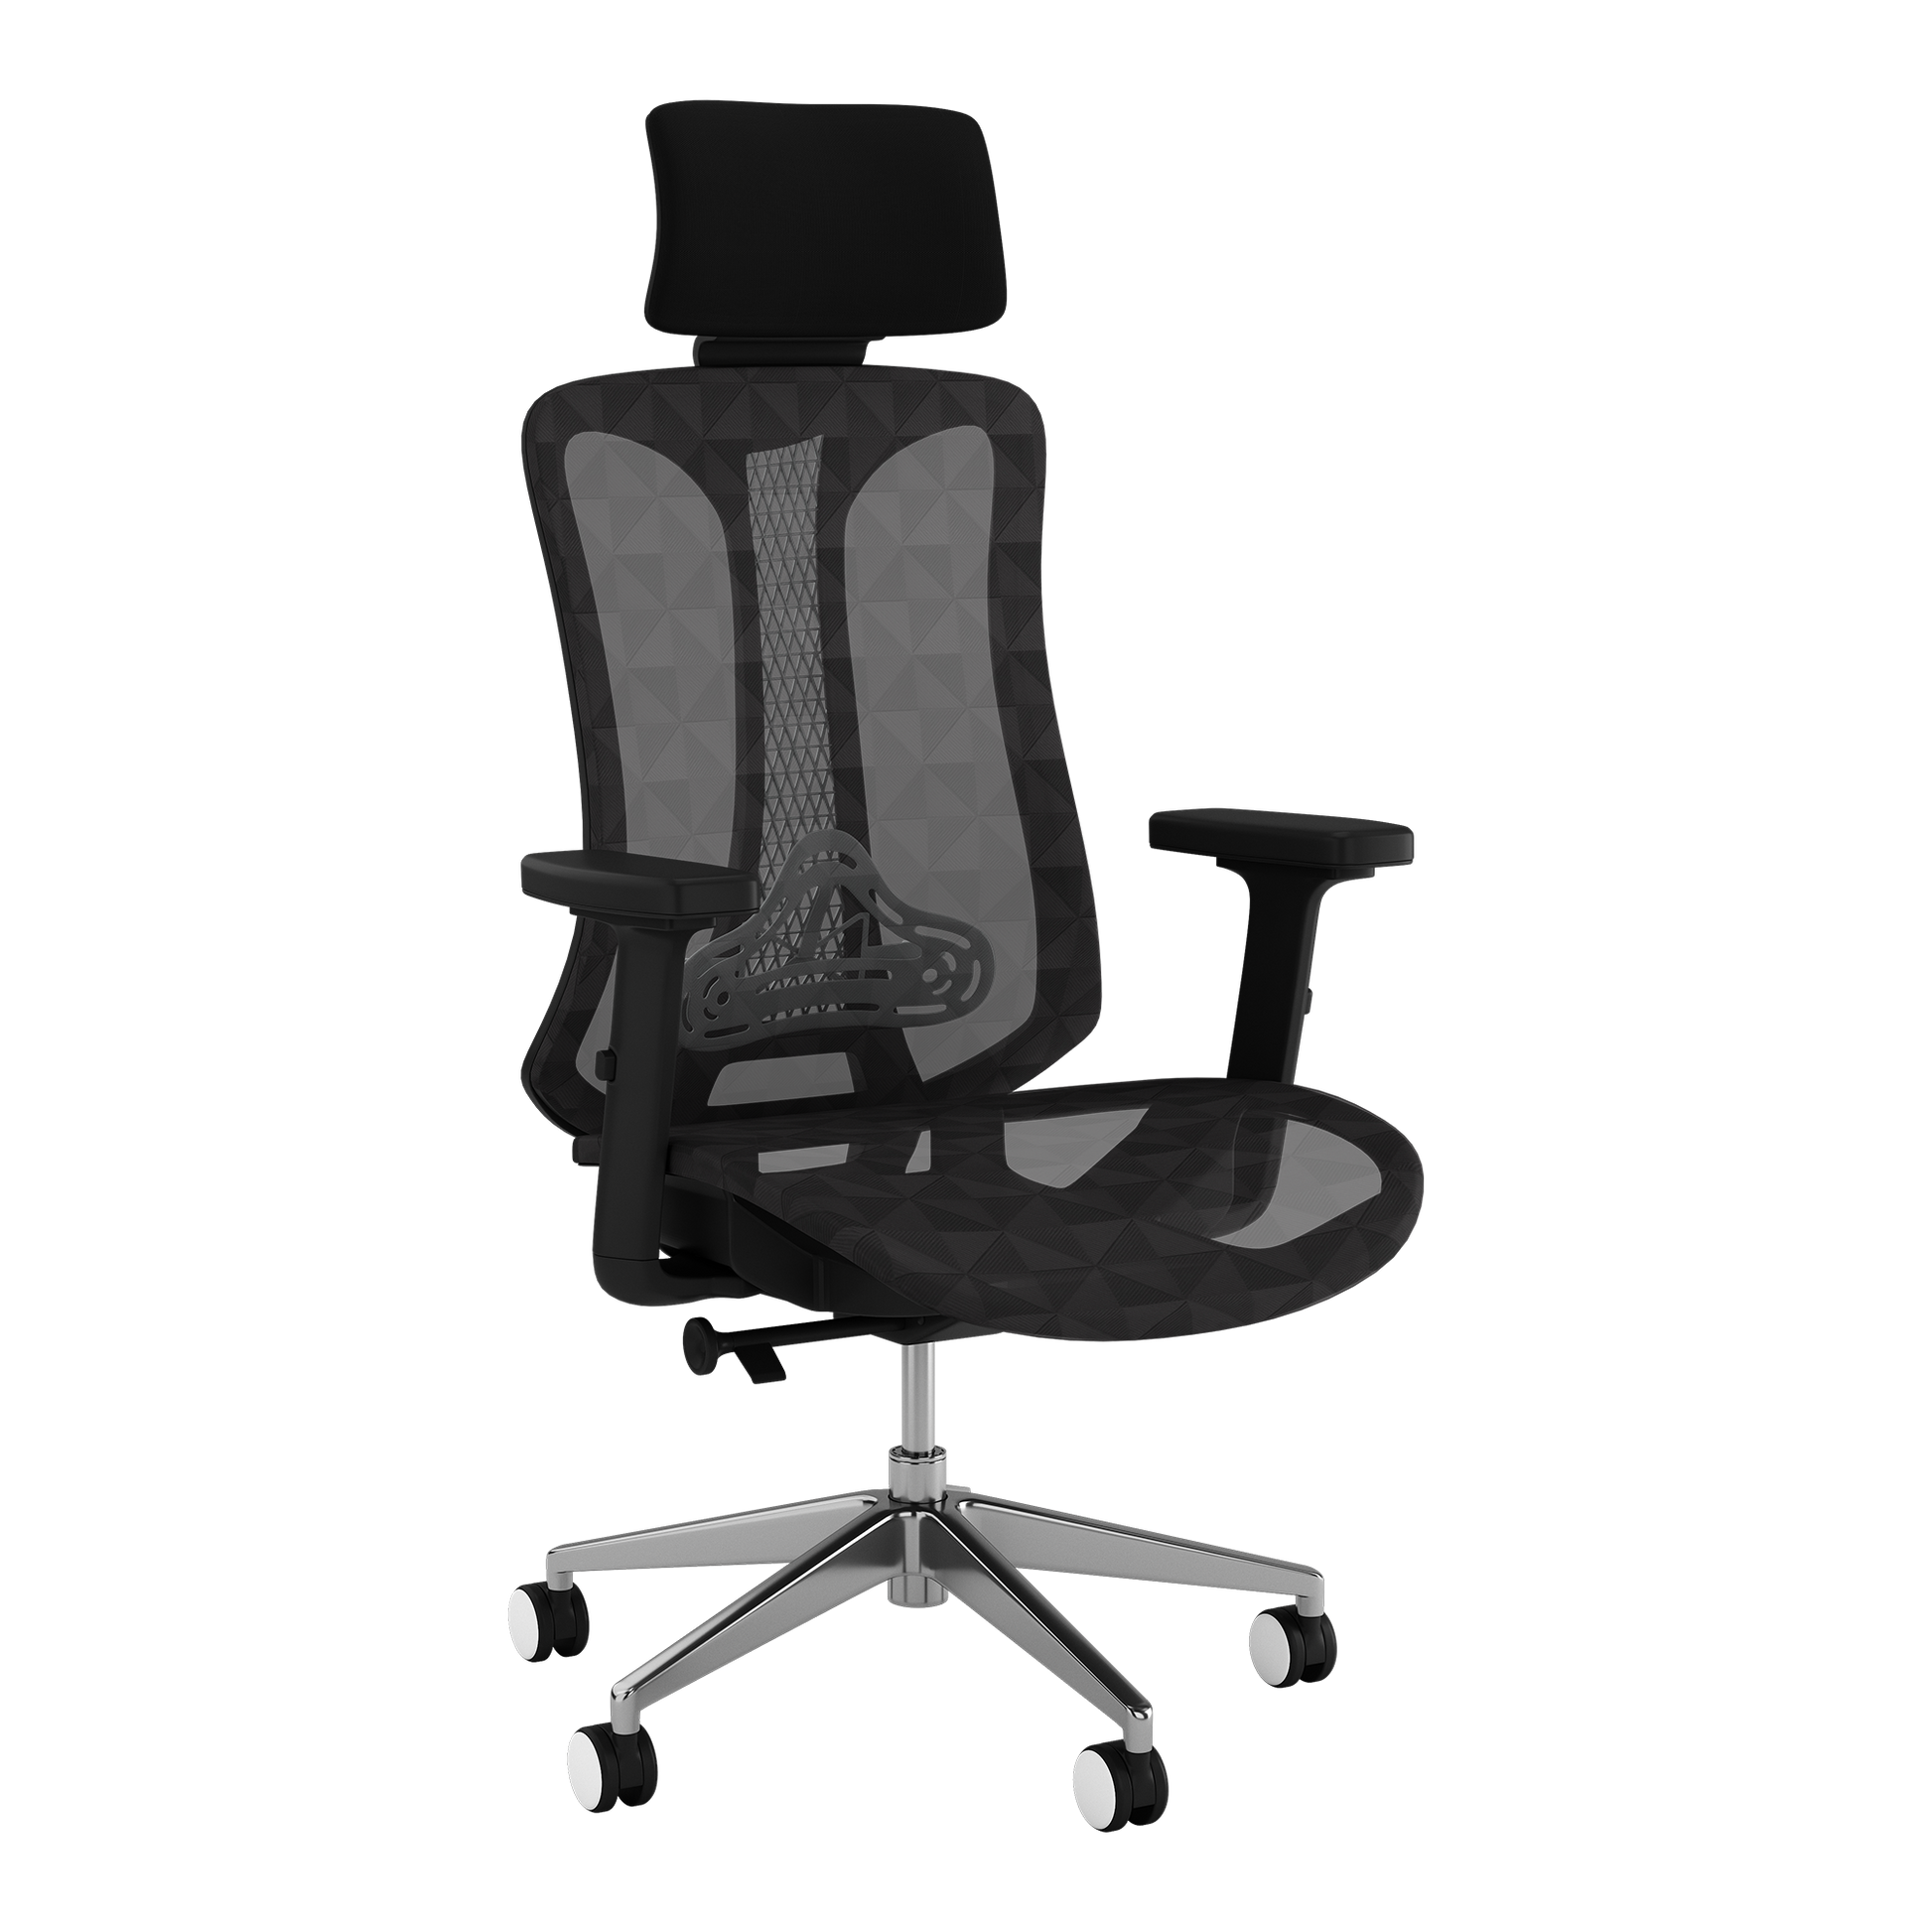 Office Chair Headrest Detachable Ergonomic Accessories Head Support Cushion